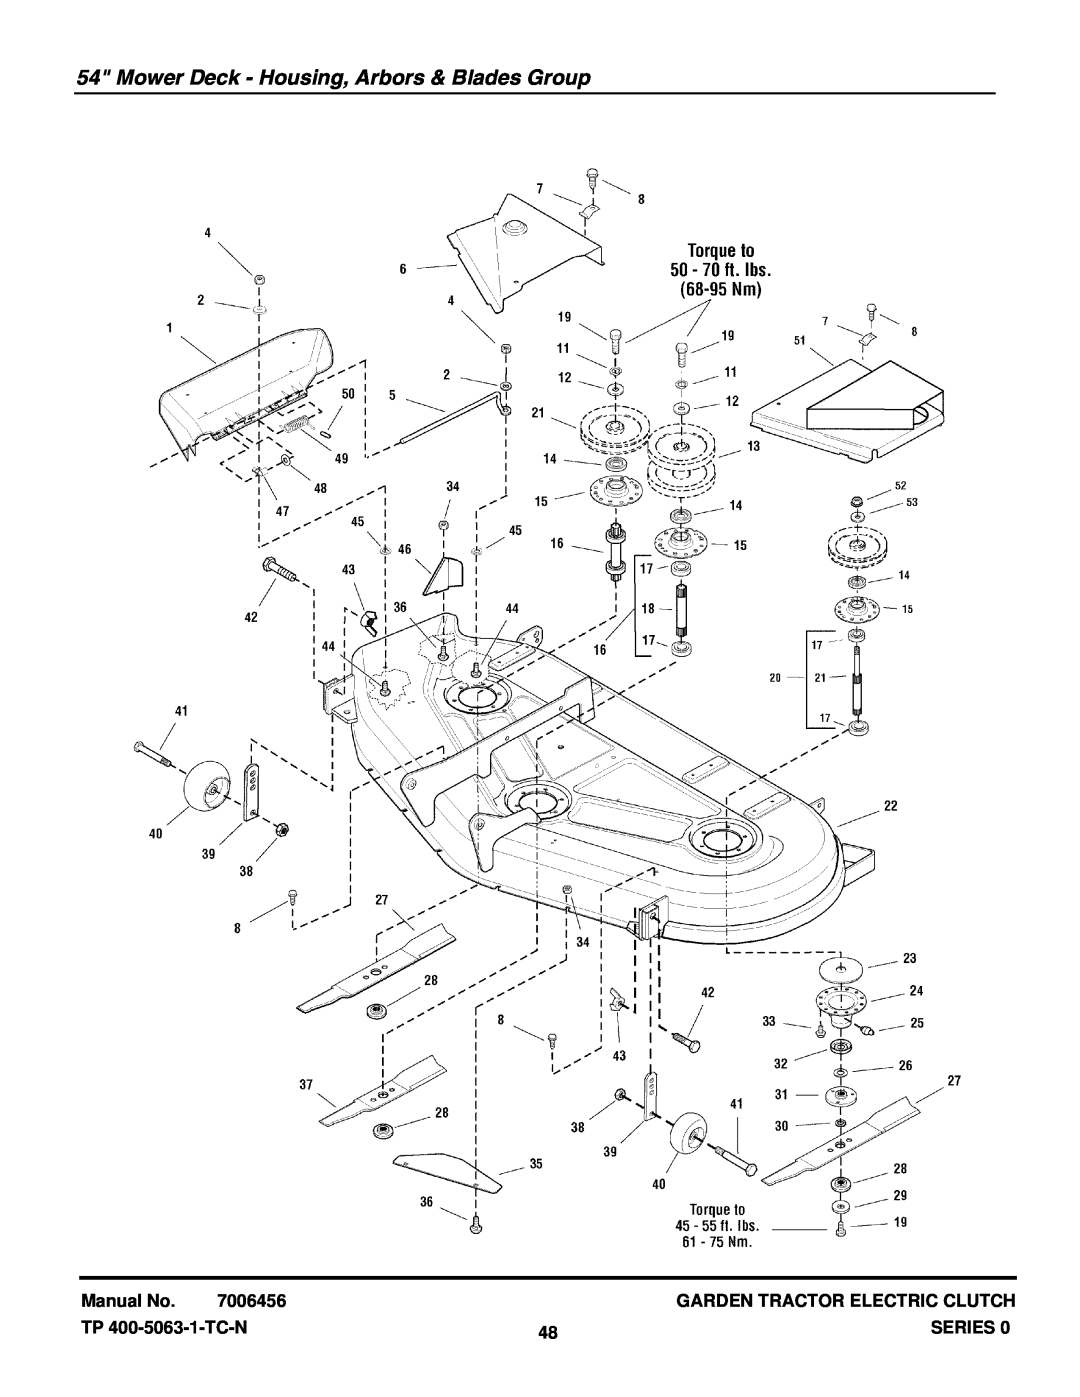 Briggs & Stratton GT23540 Mower Deck - Housing, Arbors & Blades Group, Manual No, 7006456, Garden Tractor Electric Clutch 